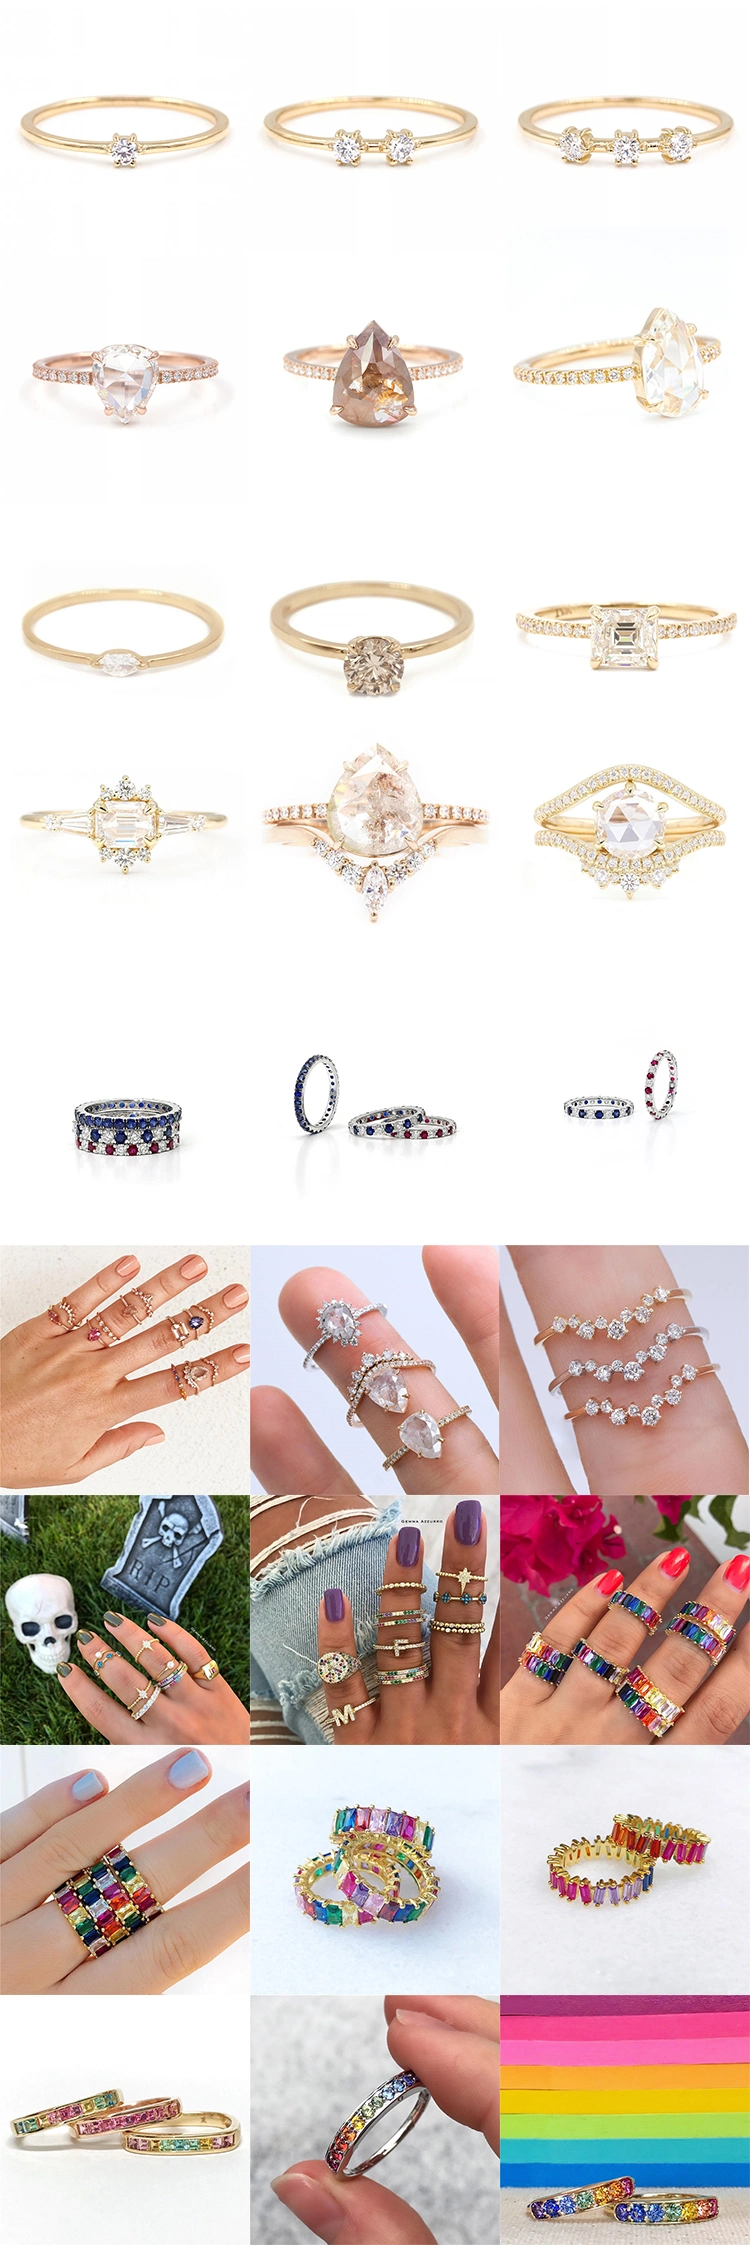 Custom Design Fashion Jewellery 18K 14K Gold with Diamonds Ring Wedding Jewelry Ring